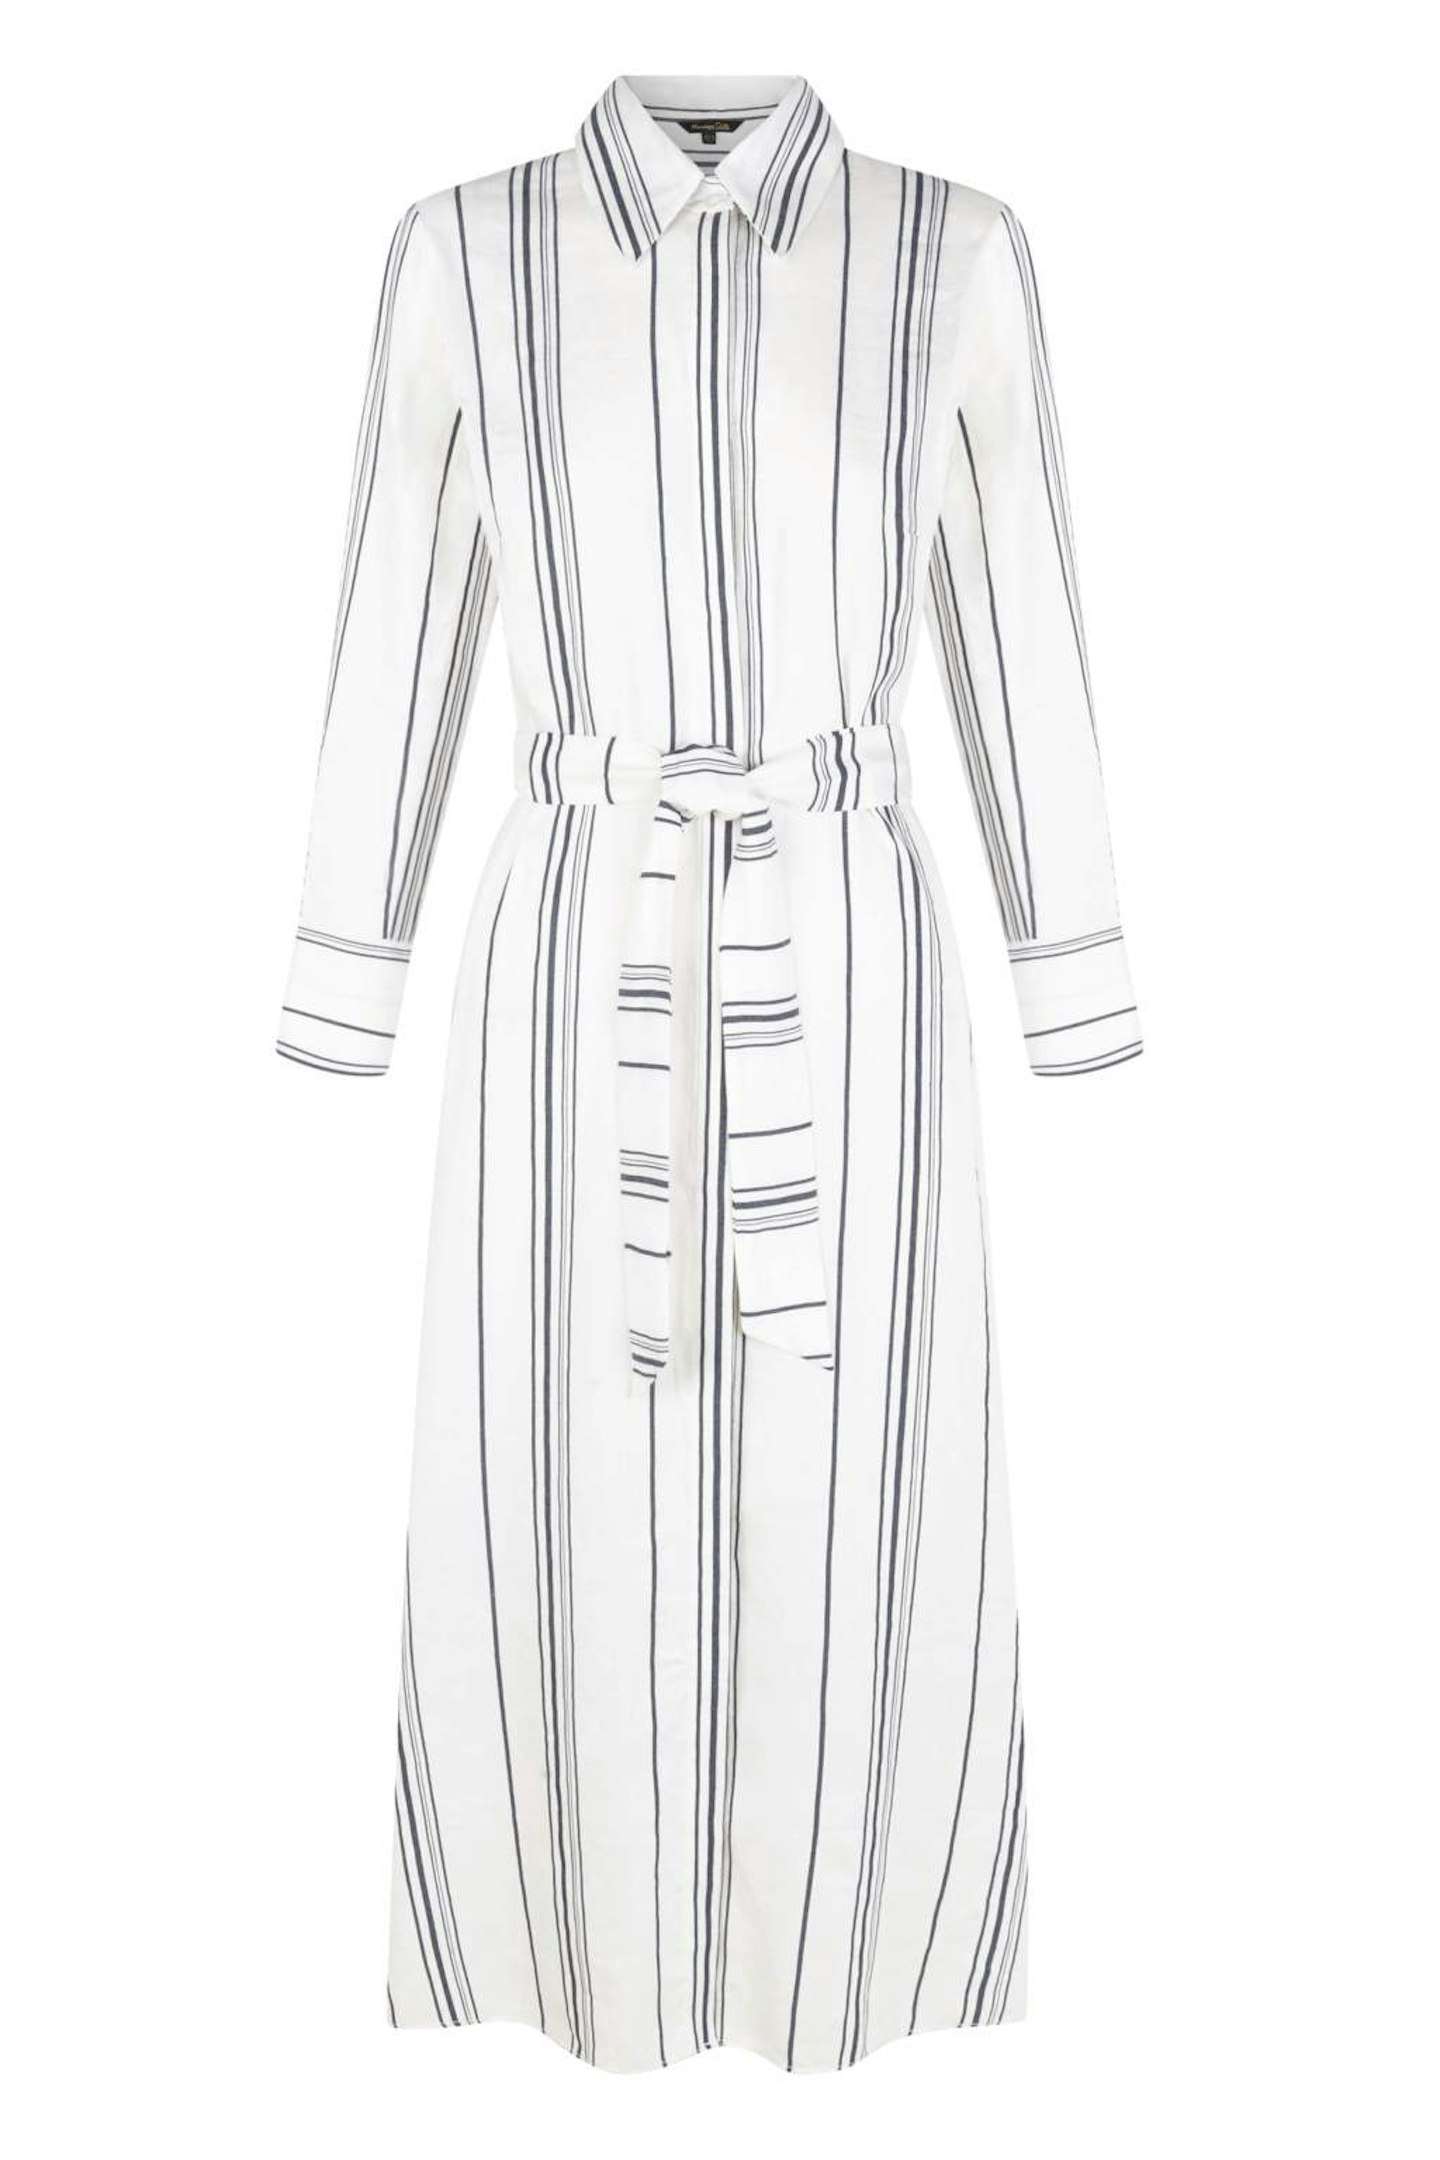 Massimo Dutti, Striped Dress, £119